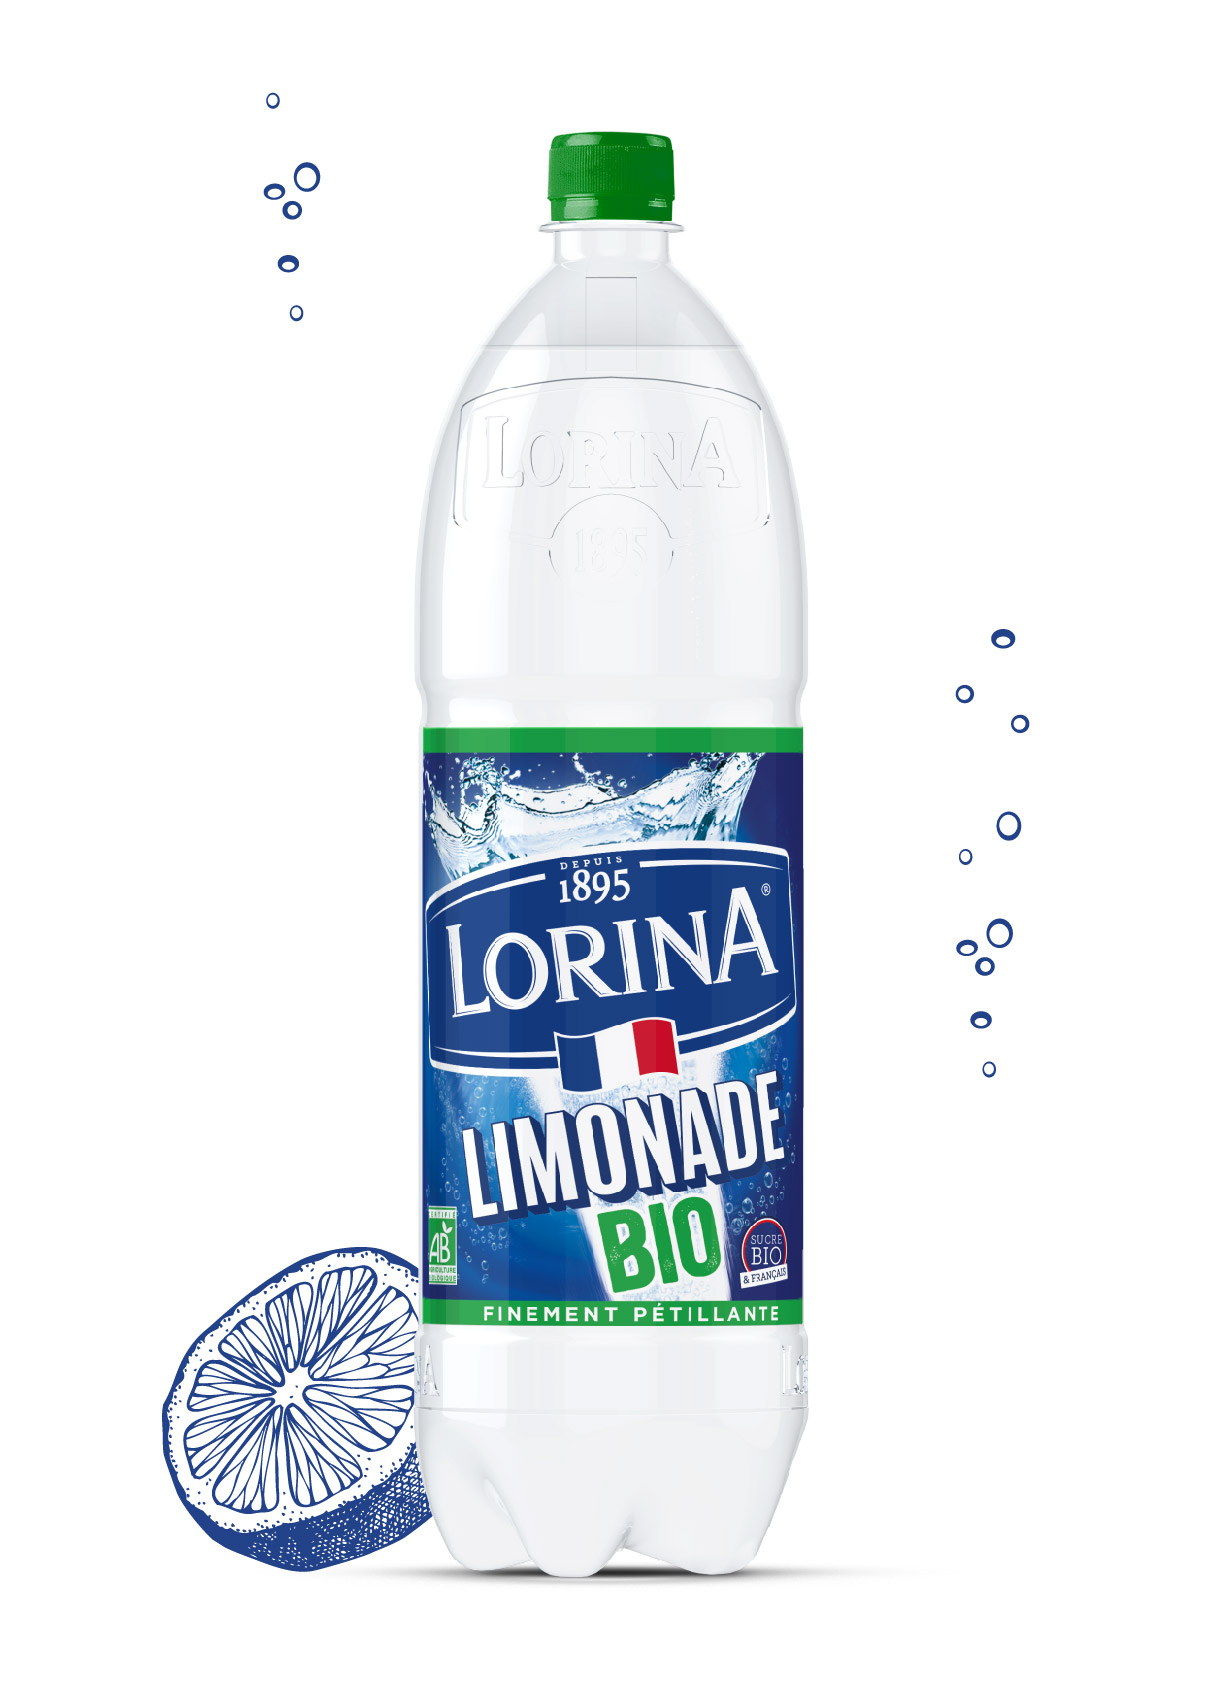 La Limonade Double Zest Bio Lorina